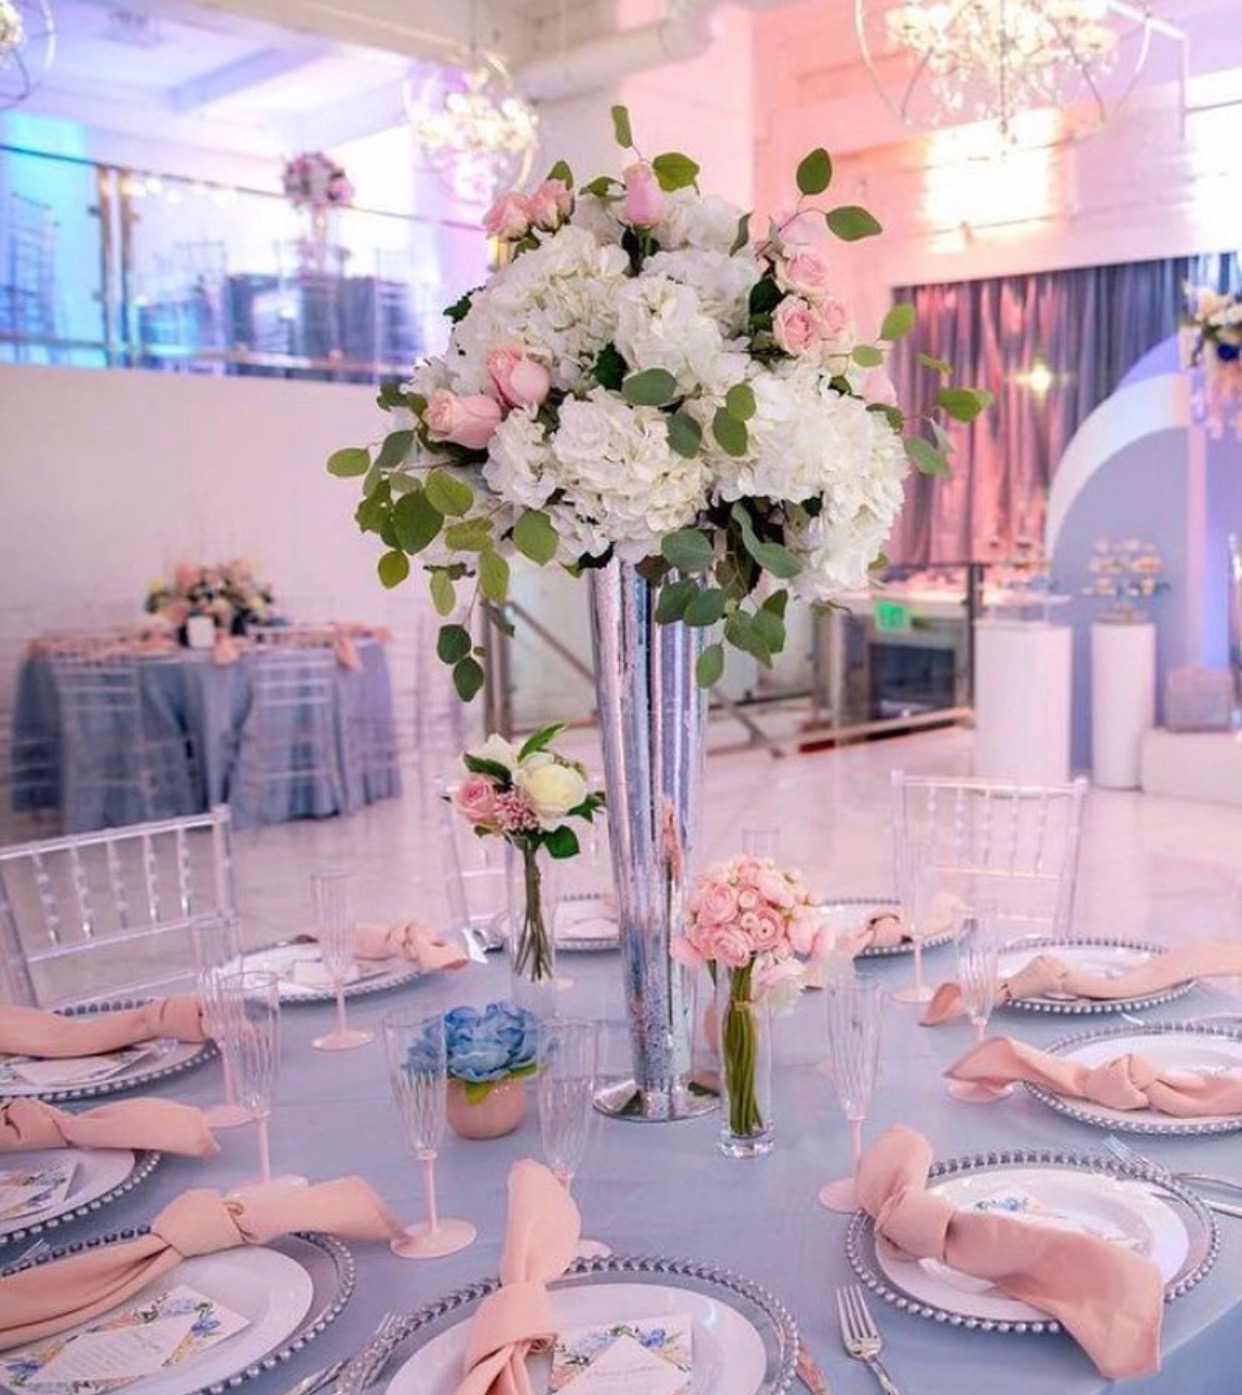 dekoracija vencanja - dekoracija stola za goste - dekoracija restorana -roze salvete - srebrni stolnjaci - providni tanjiri  IMG-5570